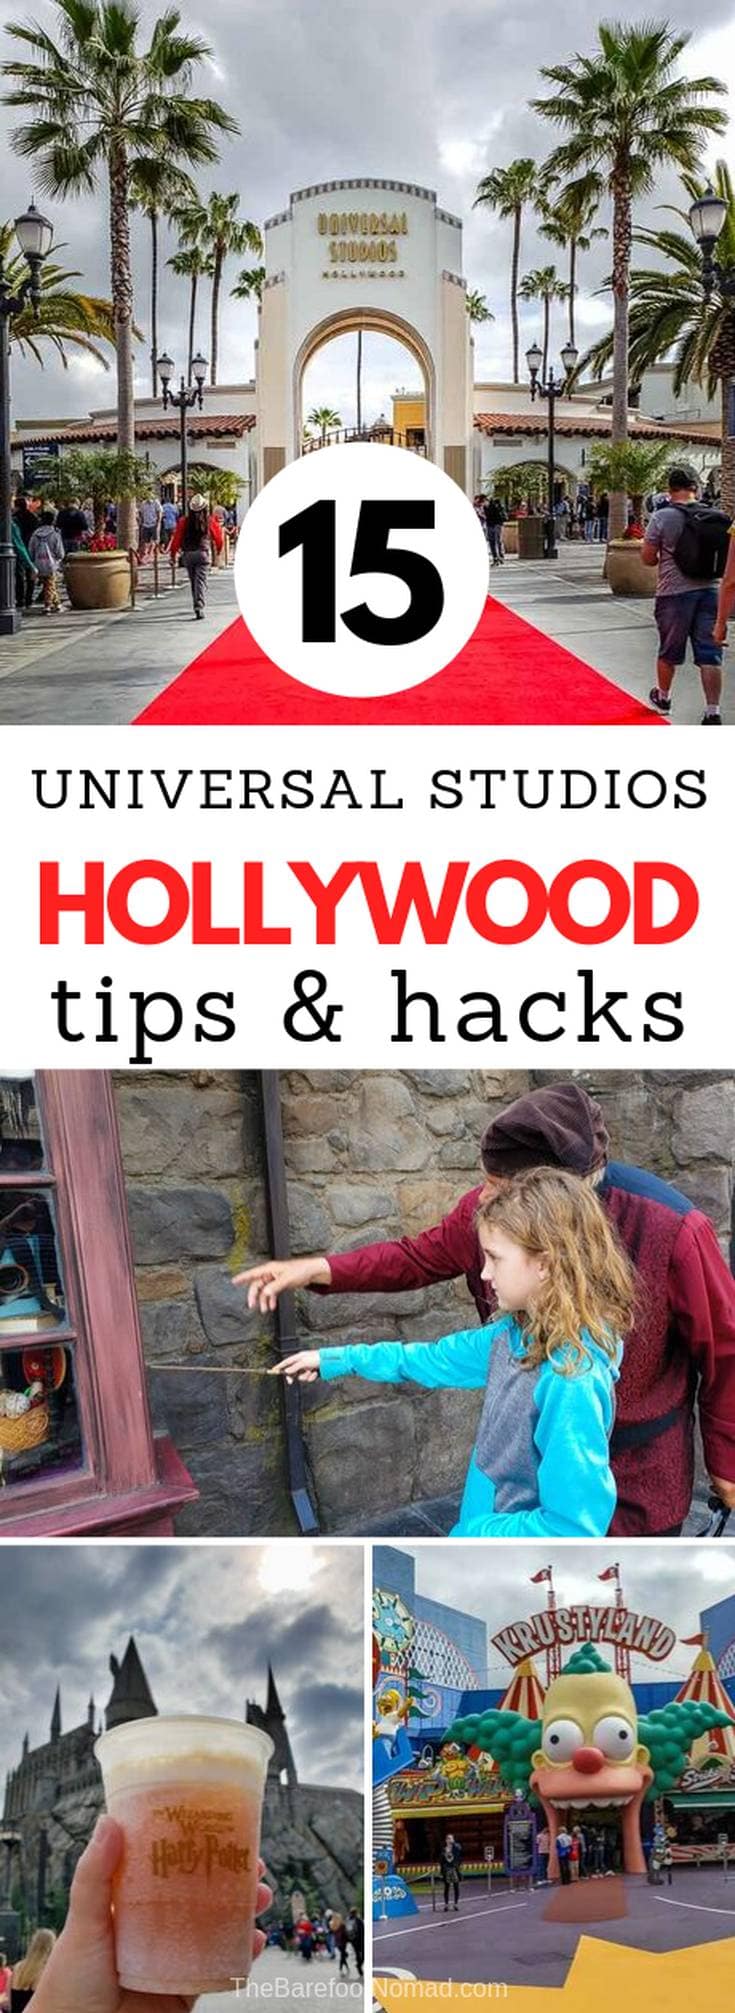 Universal Studios Hollywood tips